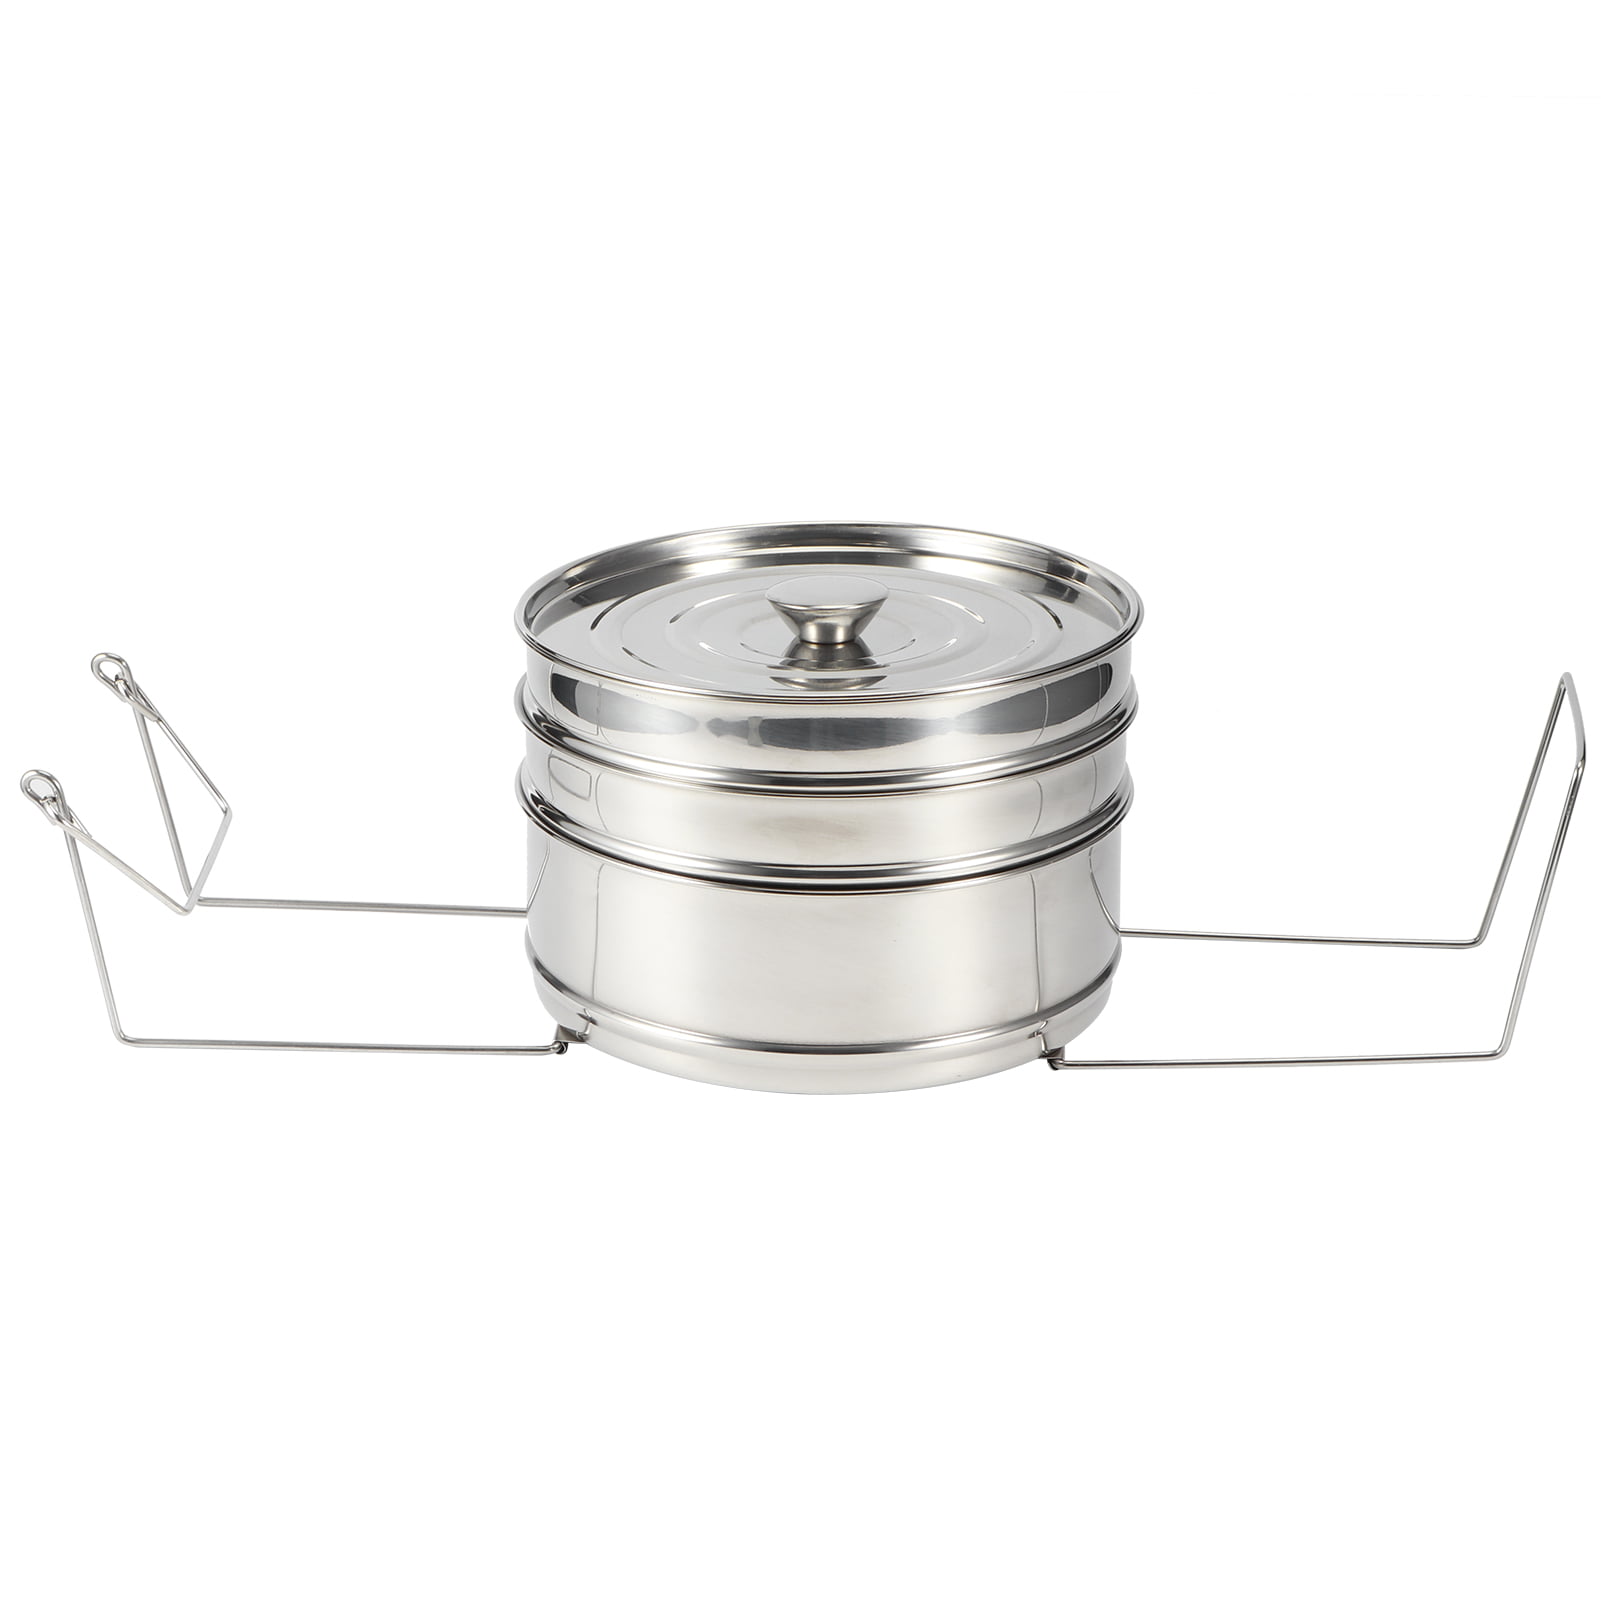 Pot Stackable Cooker Pot Pressure Cooker Accessories Healthy For Rice Vegetables 